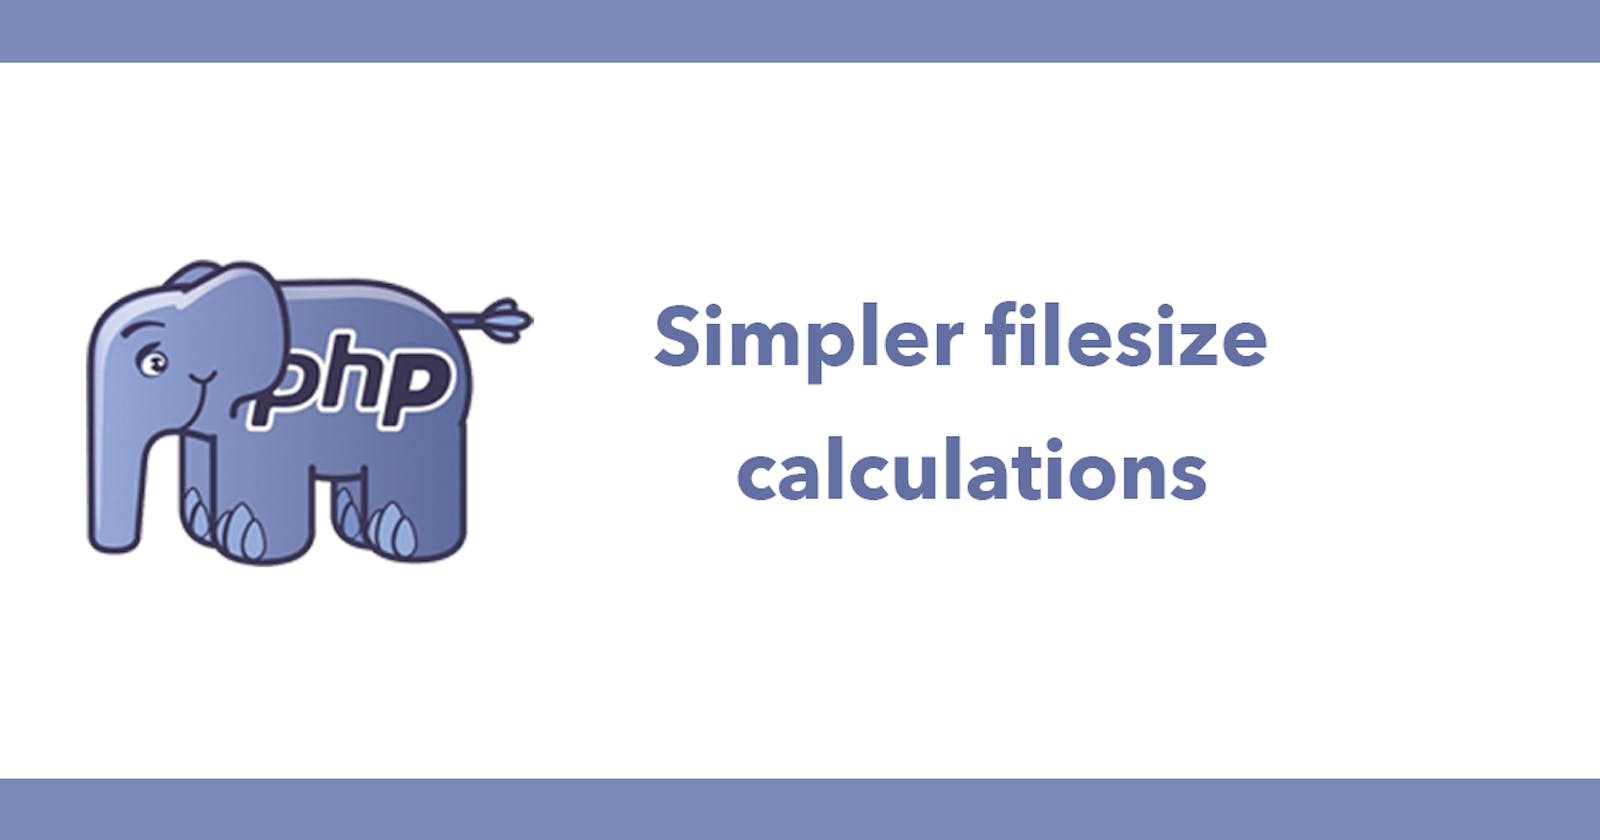 Simpler filesize calculations